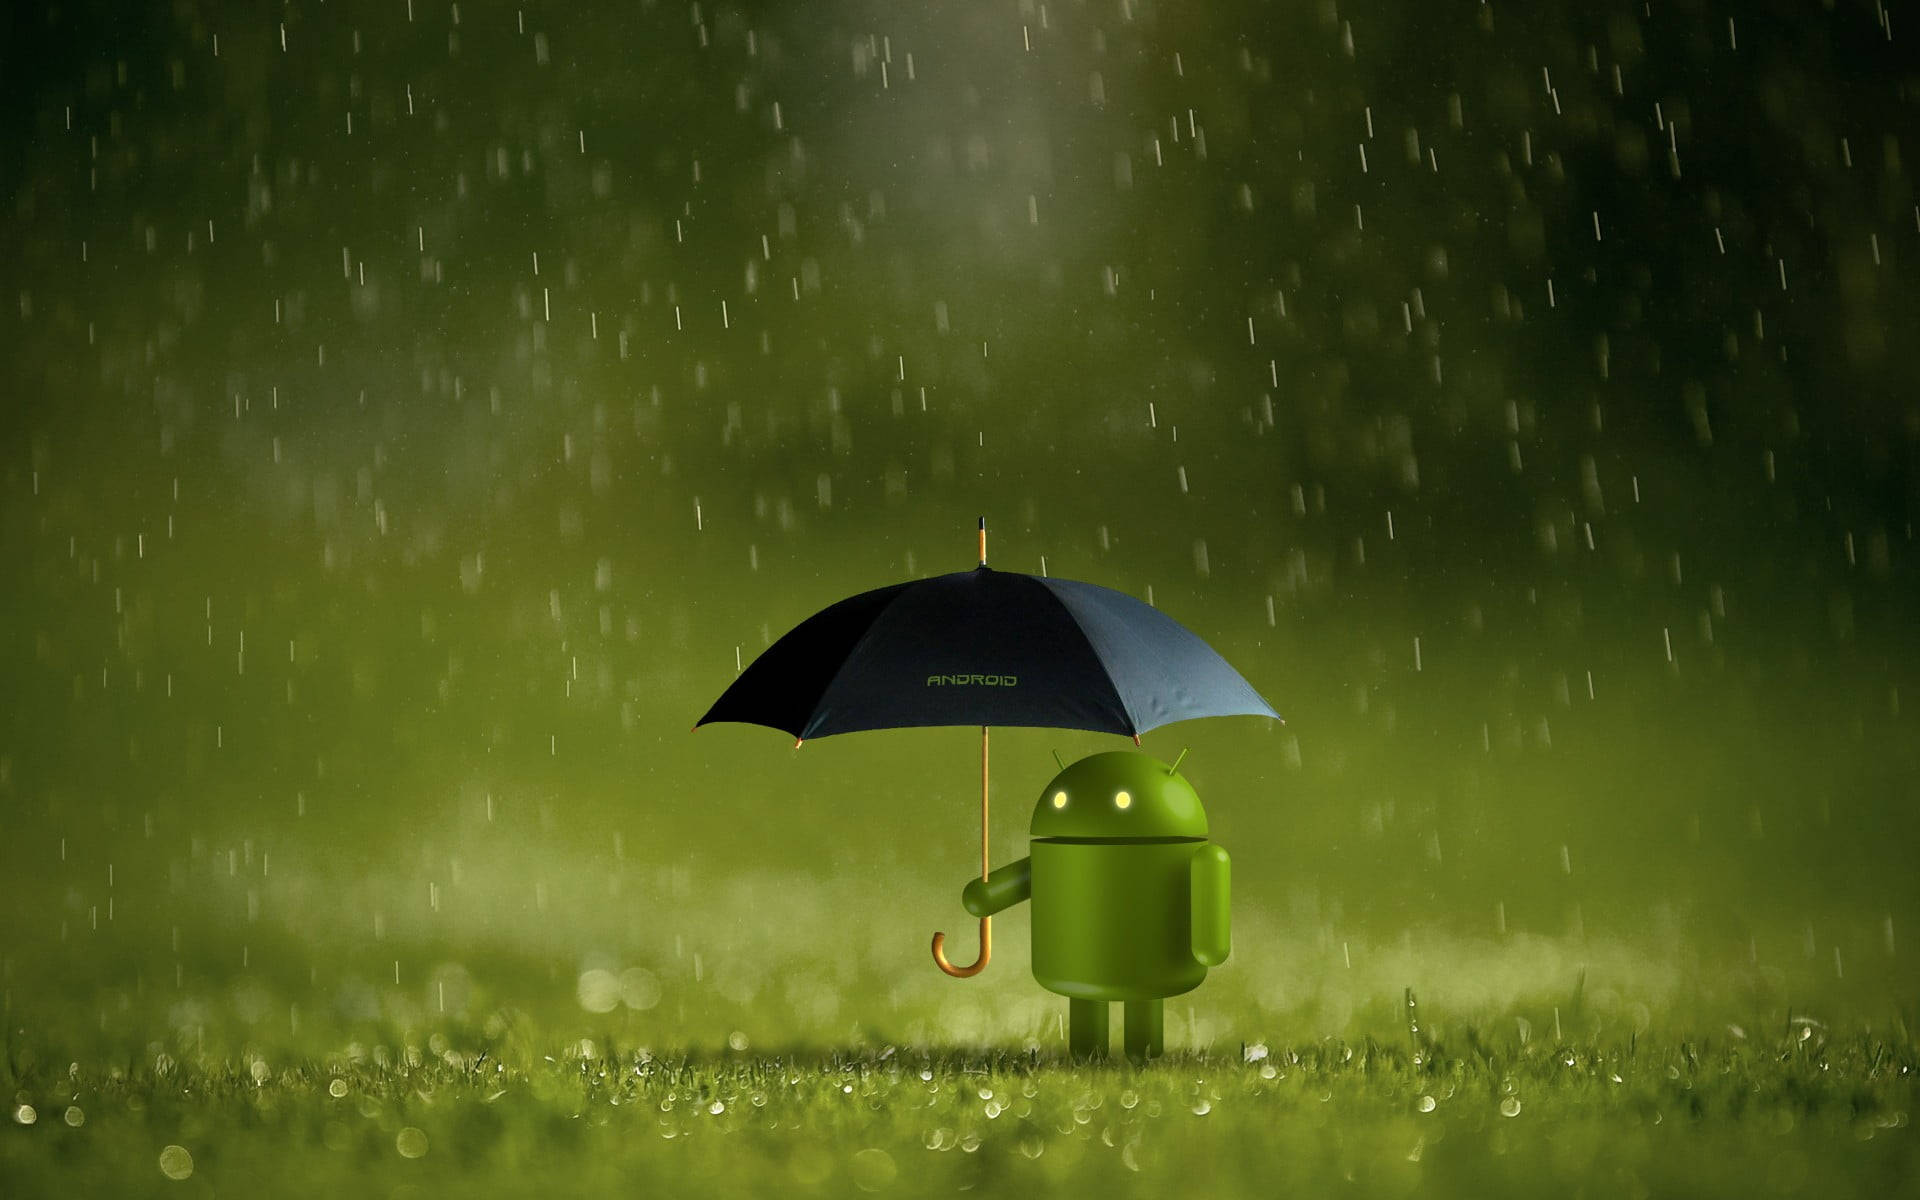 Android Under Blue Umbrella Most Beautiful Rain Background